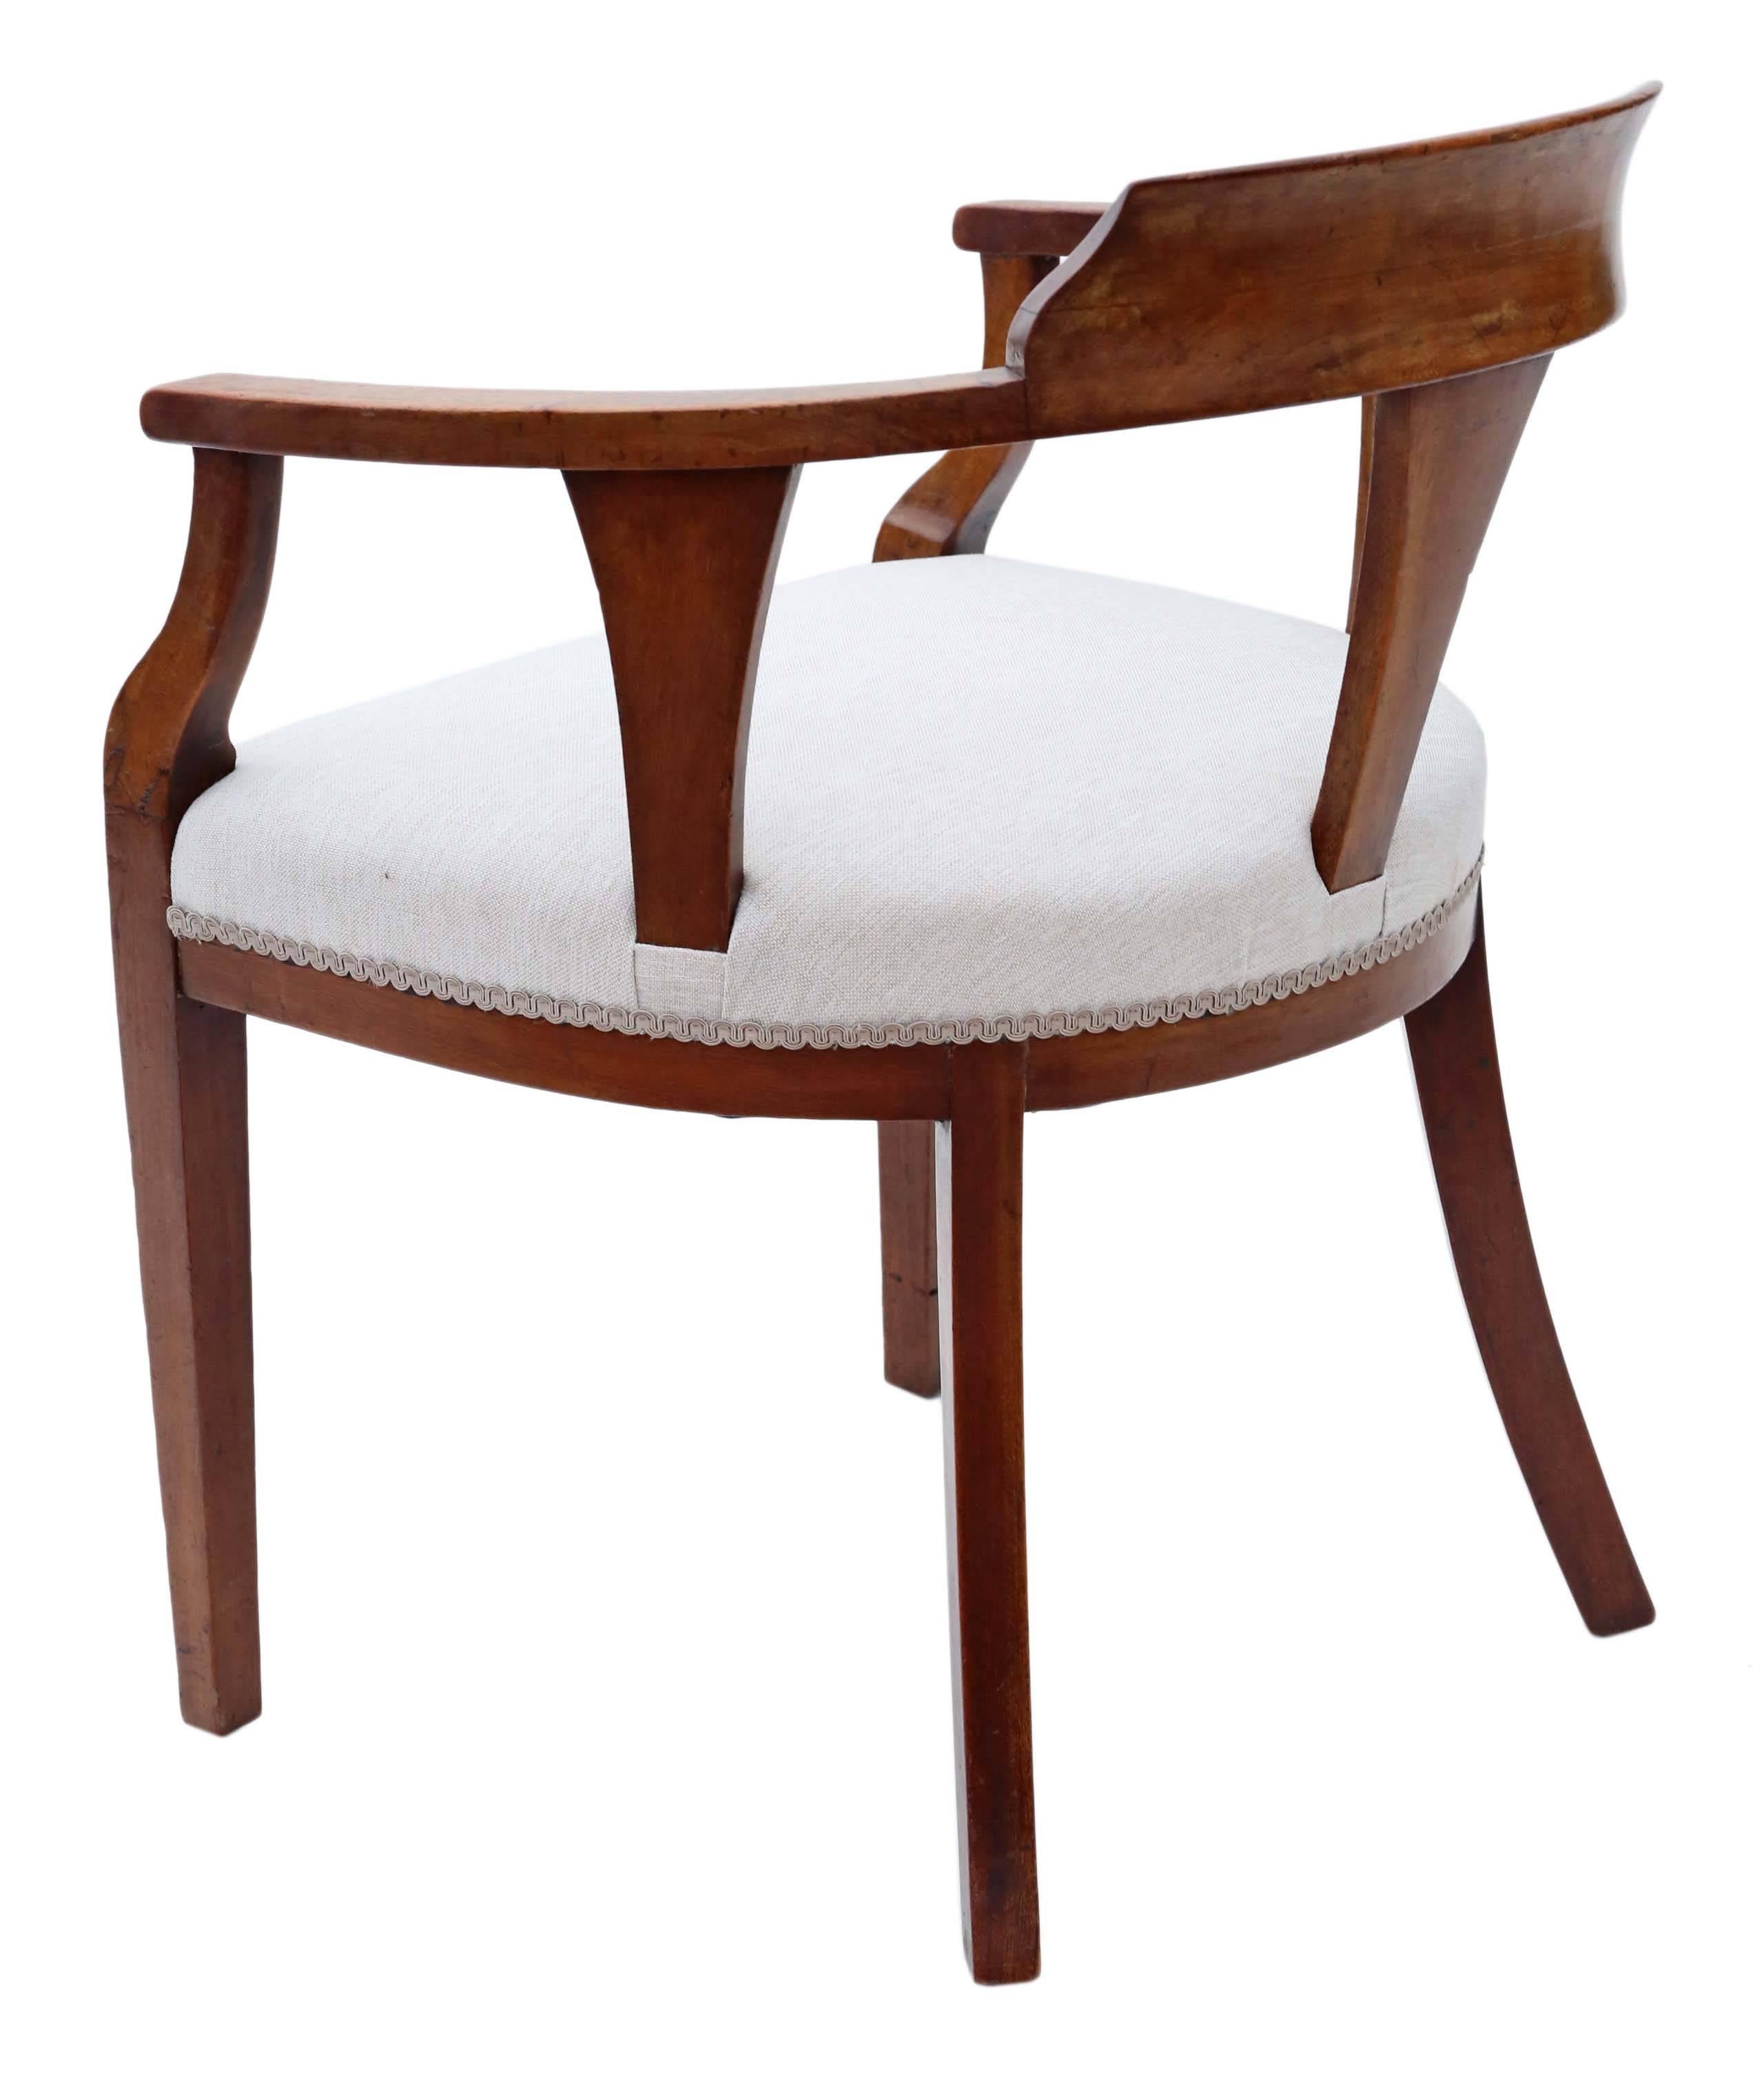 British Antique Quality Edwardian Inlaid Mahogany Corner Arm Tub Chair